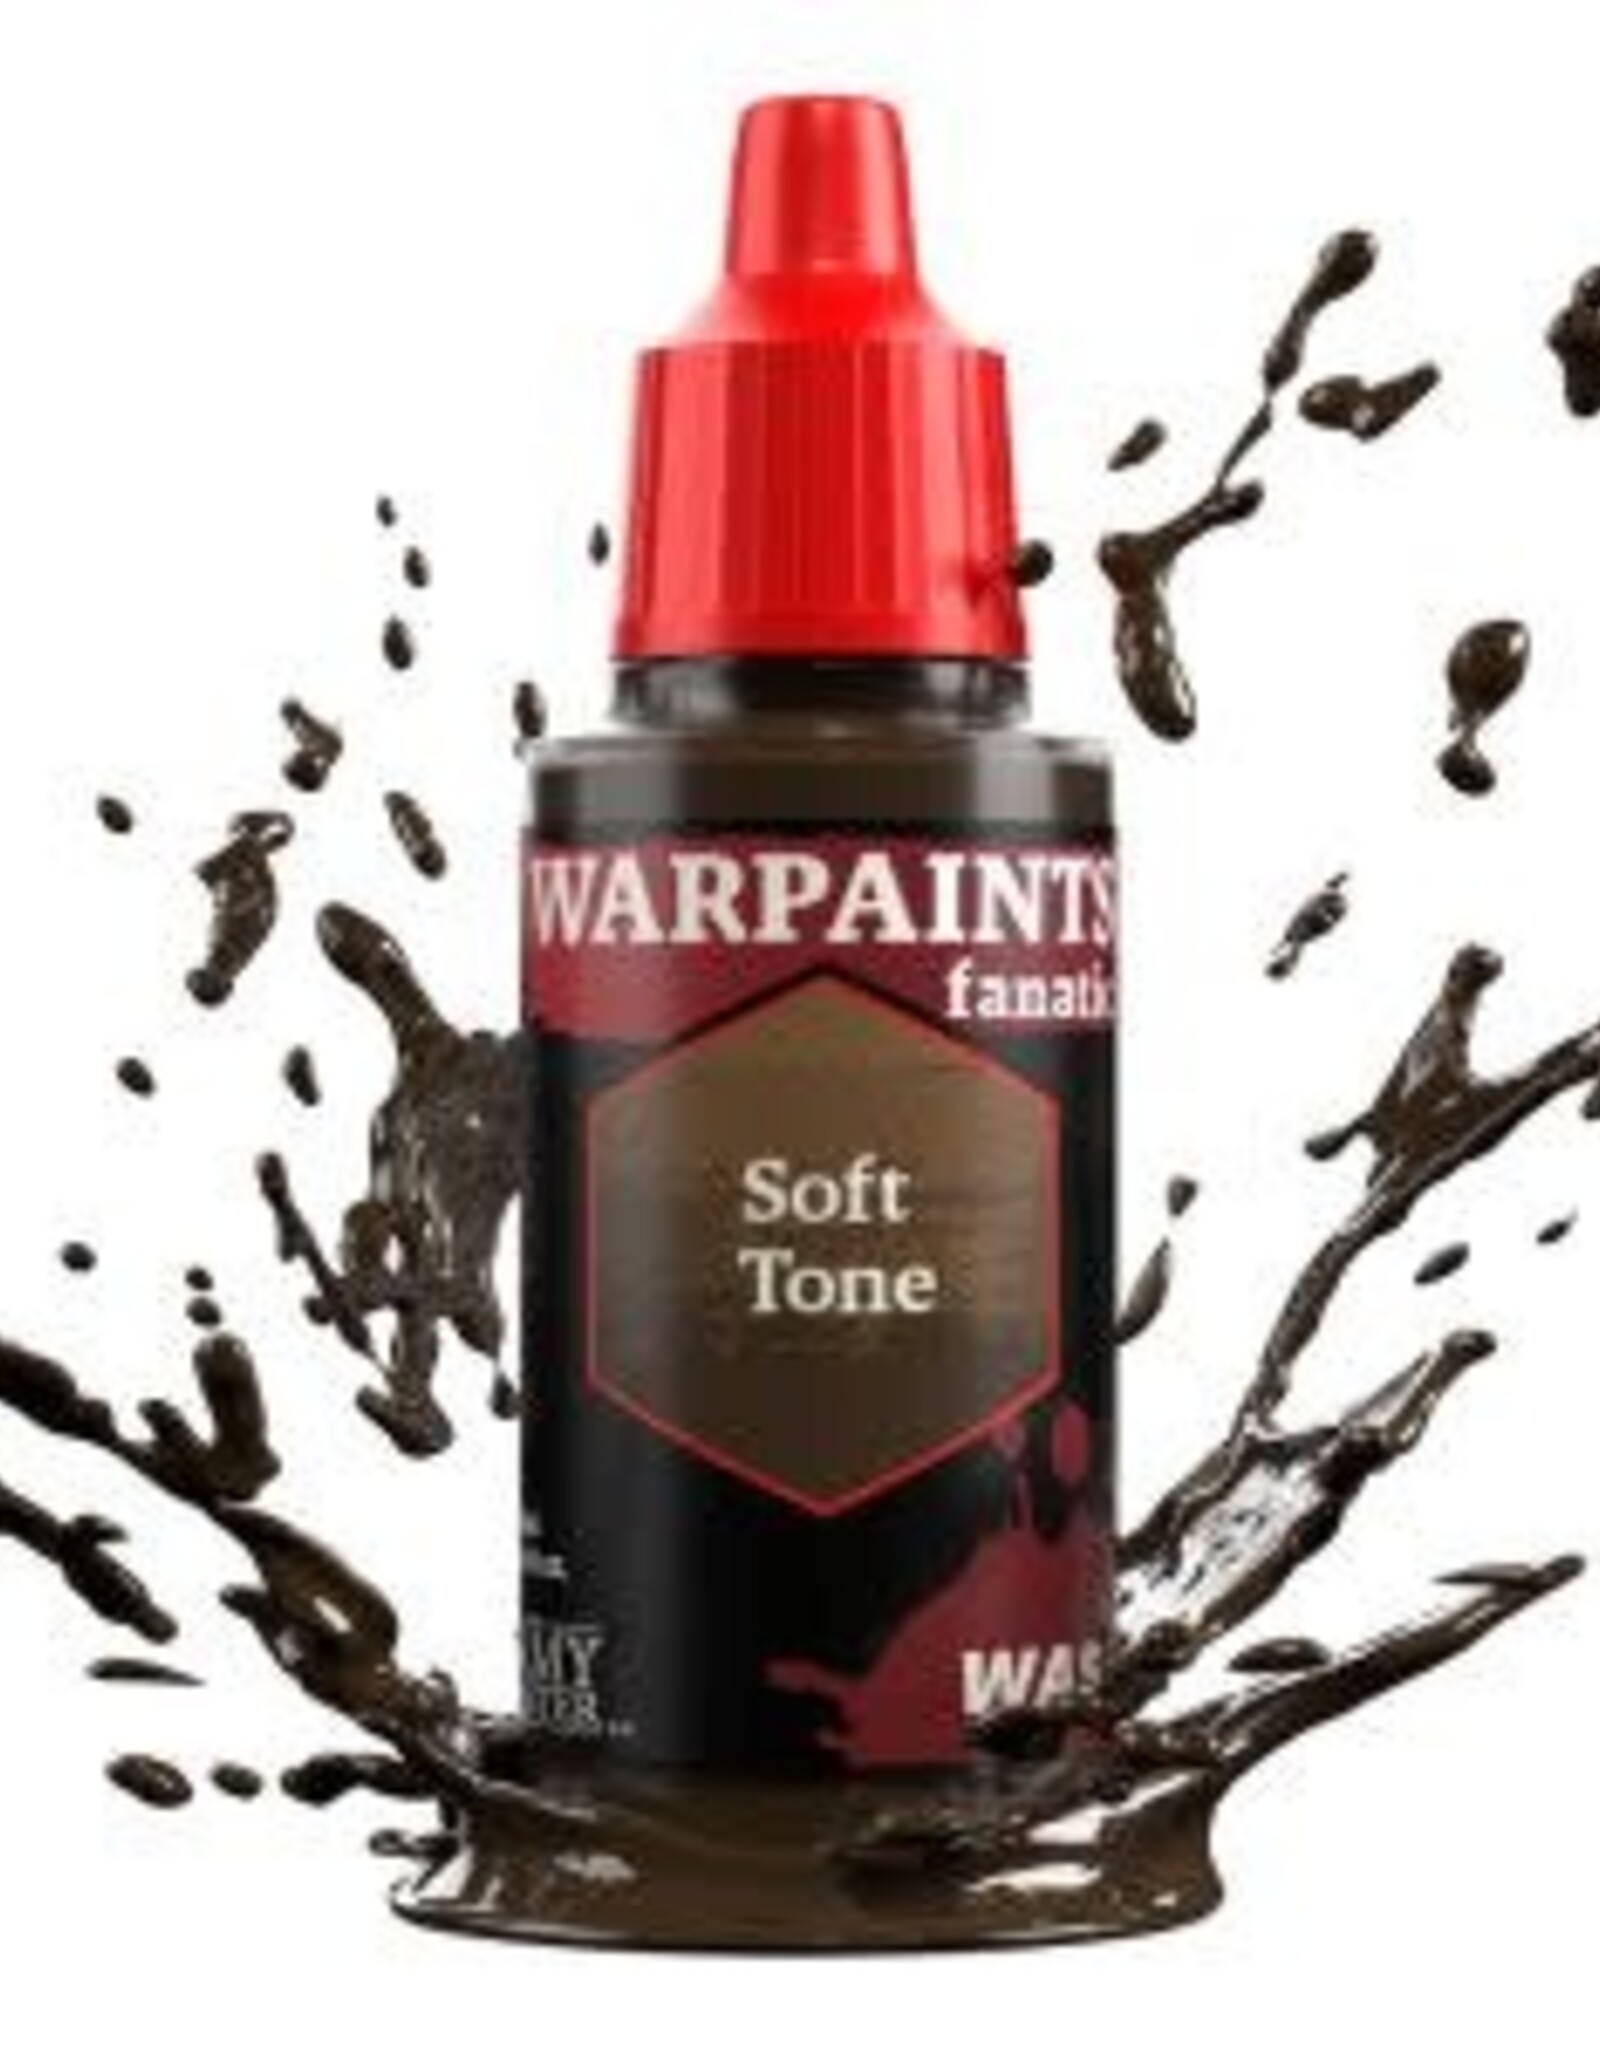 Warpaints Fanatic Wash: Soft Tone